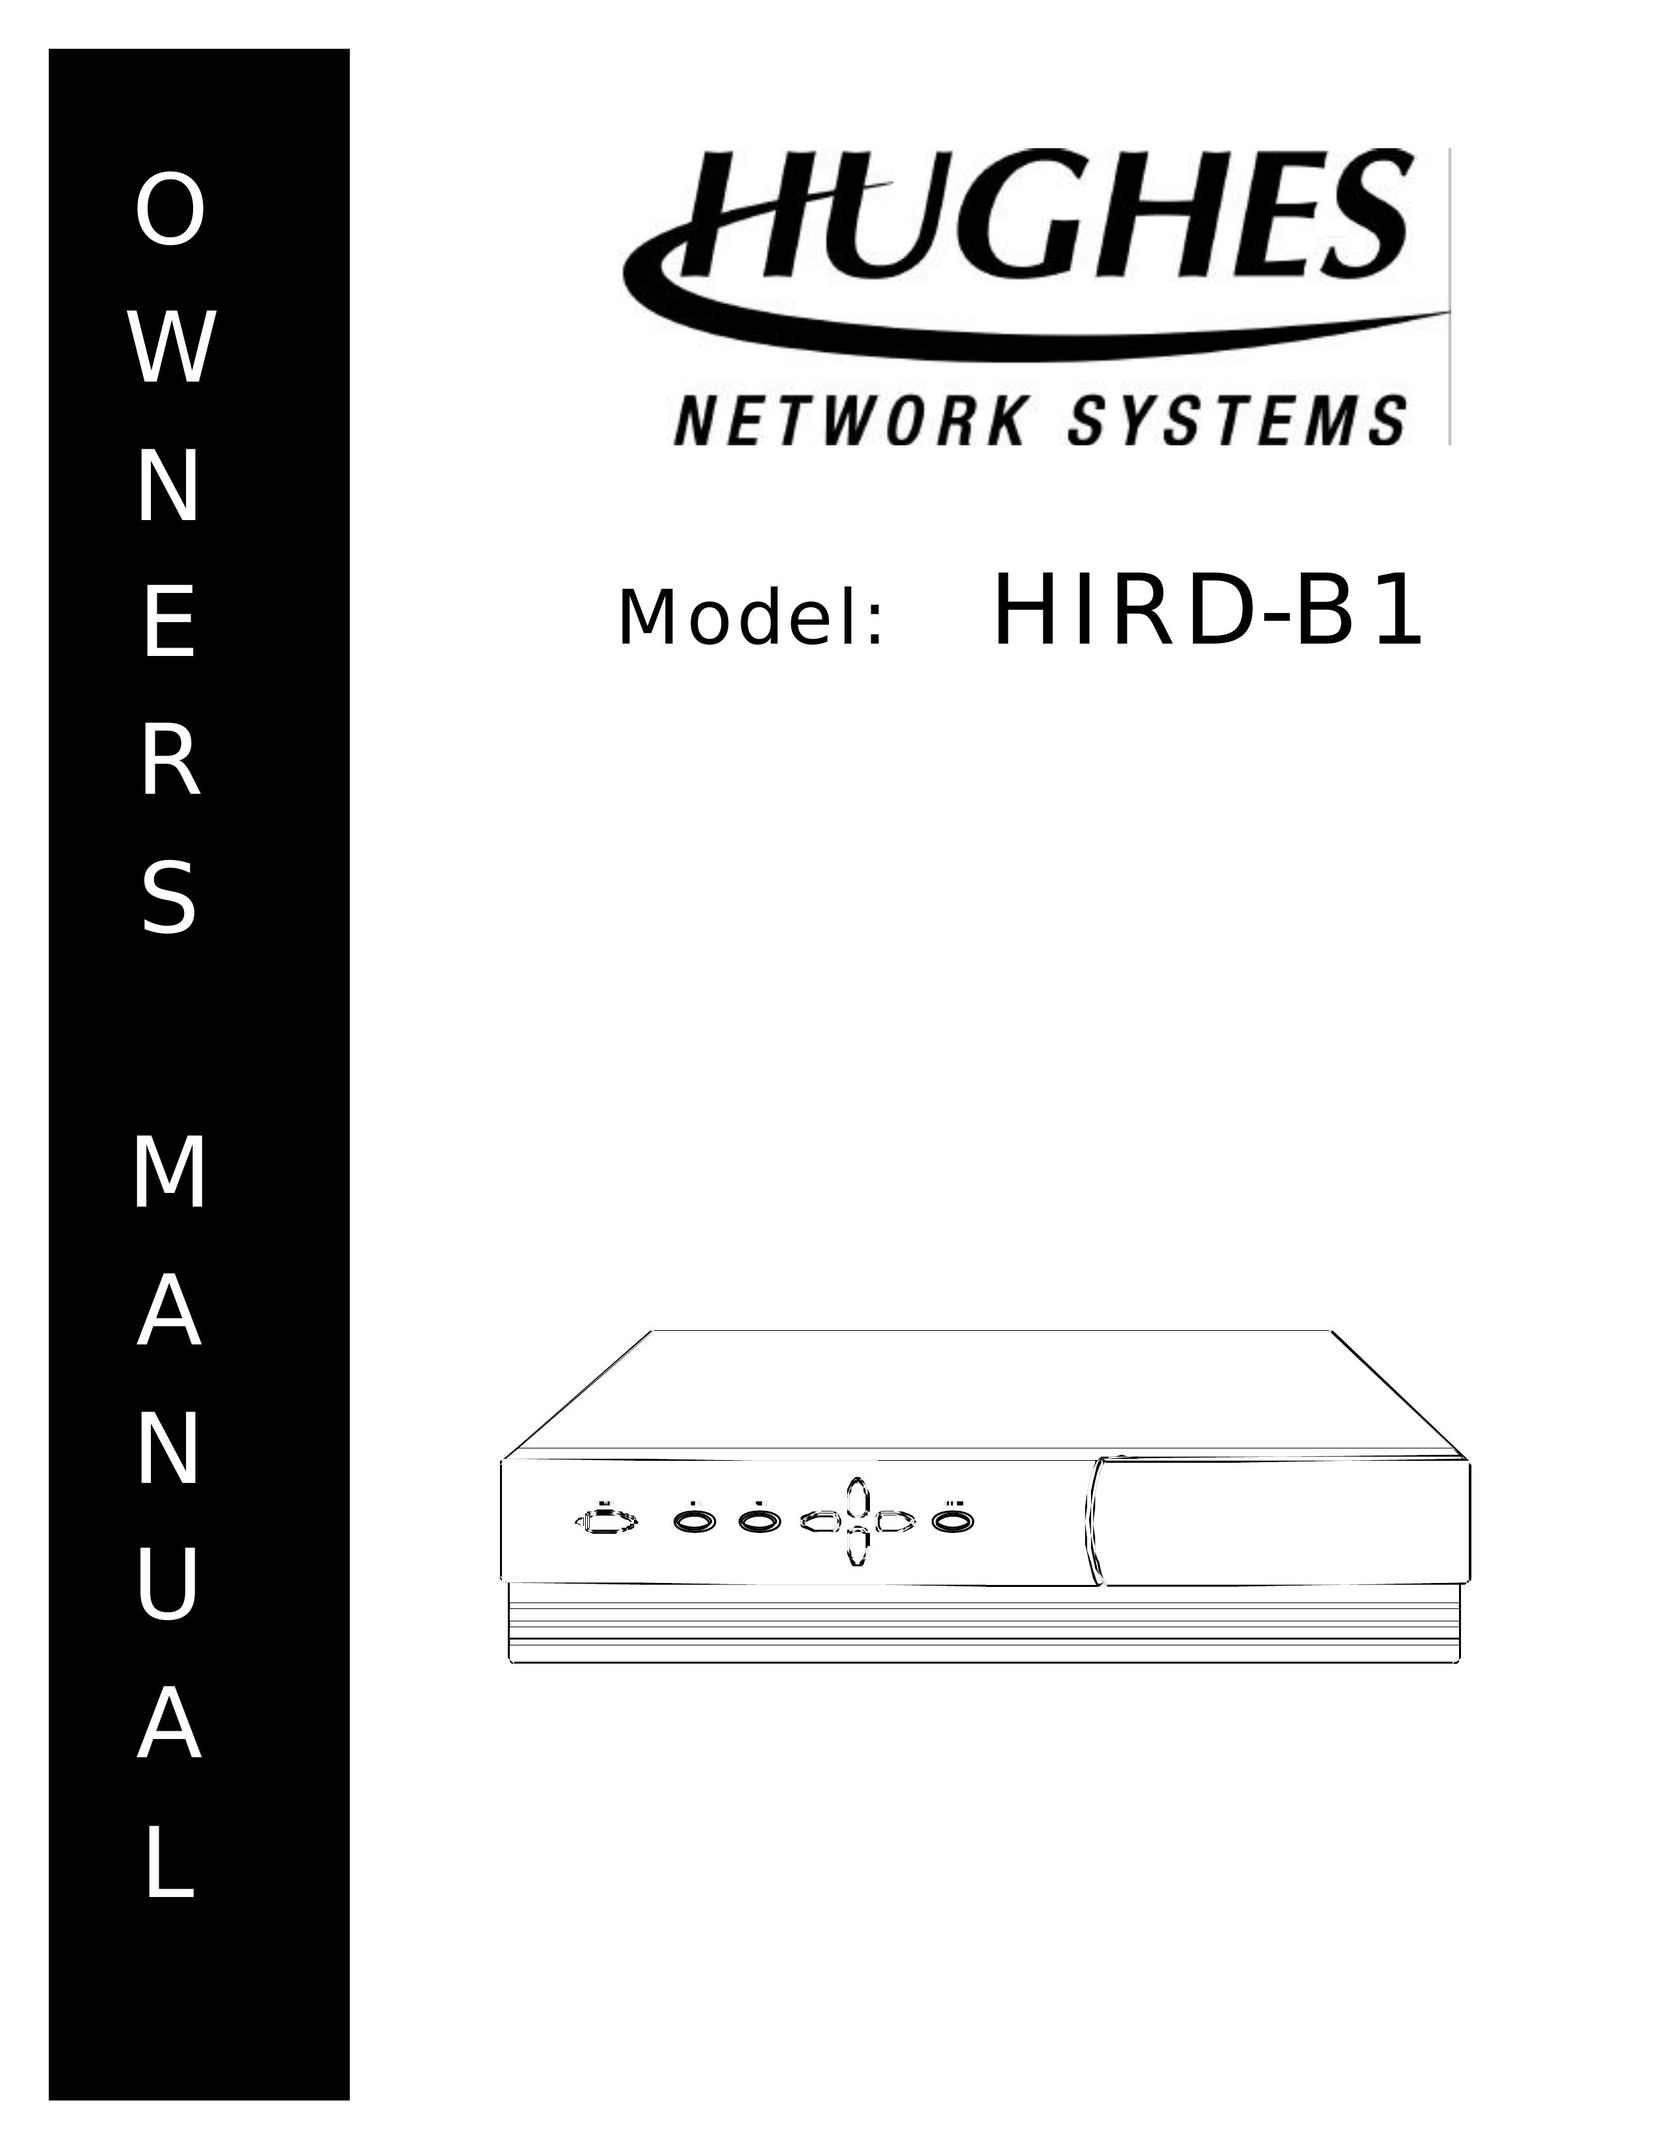 DirecTV HIRD-B1 Satellite TV System User Manual